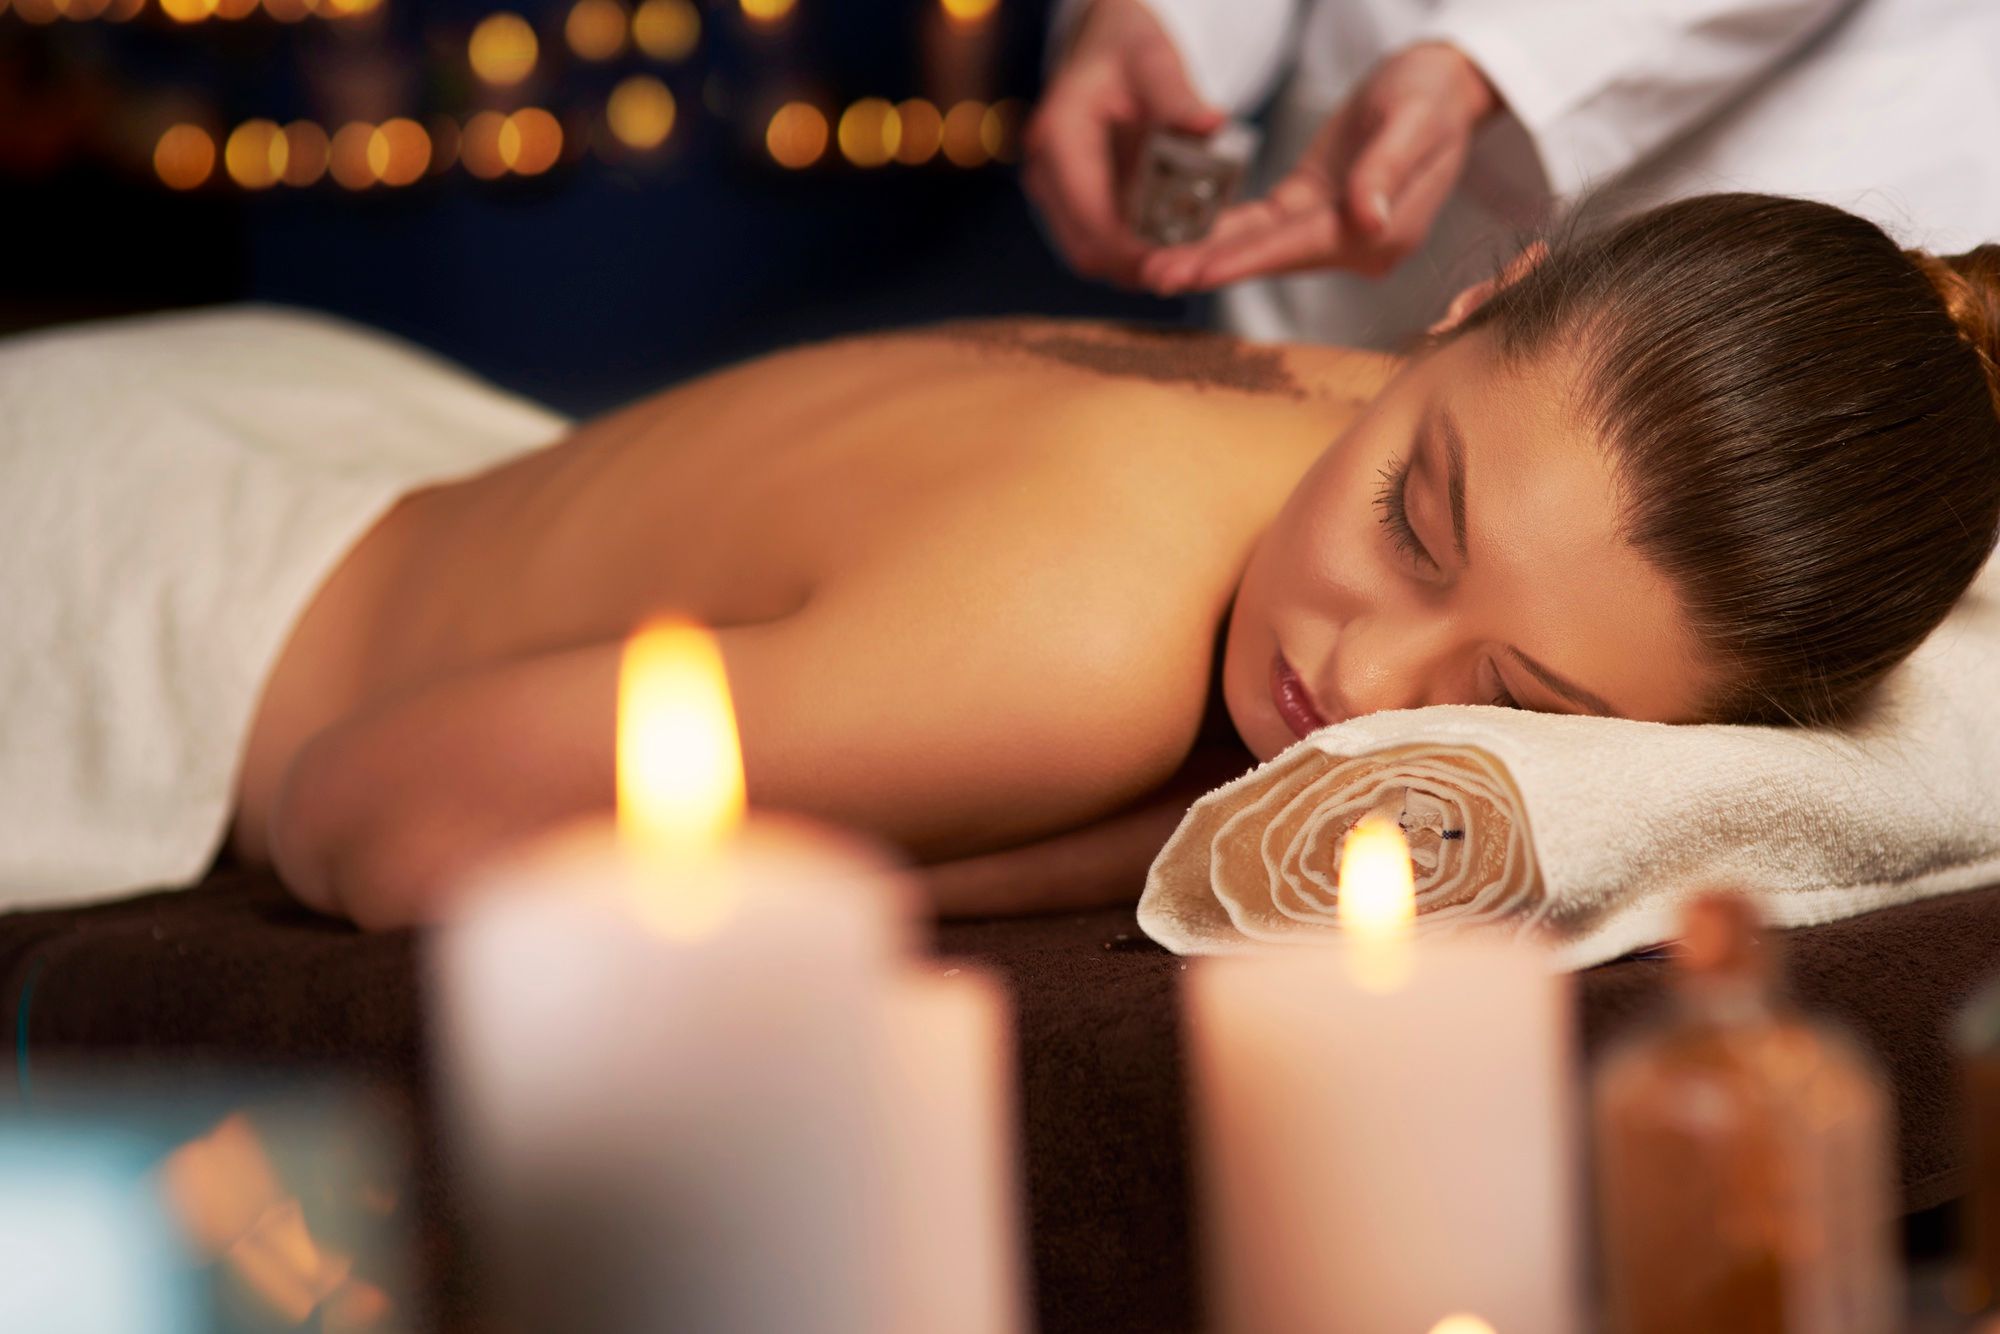 Body Massage Therapist Orlando FL – Couples Massage Spa Service